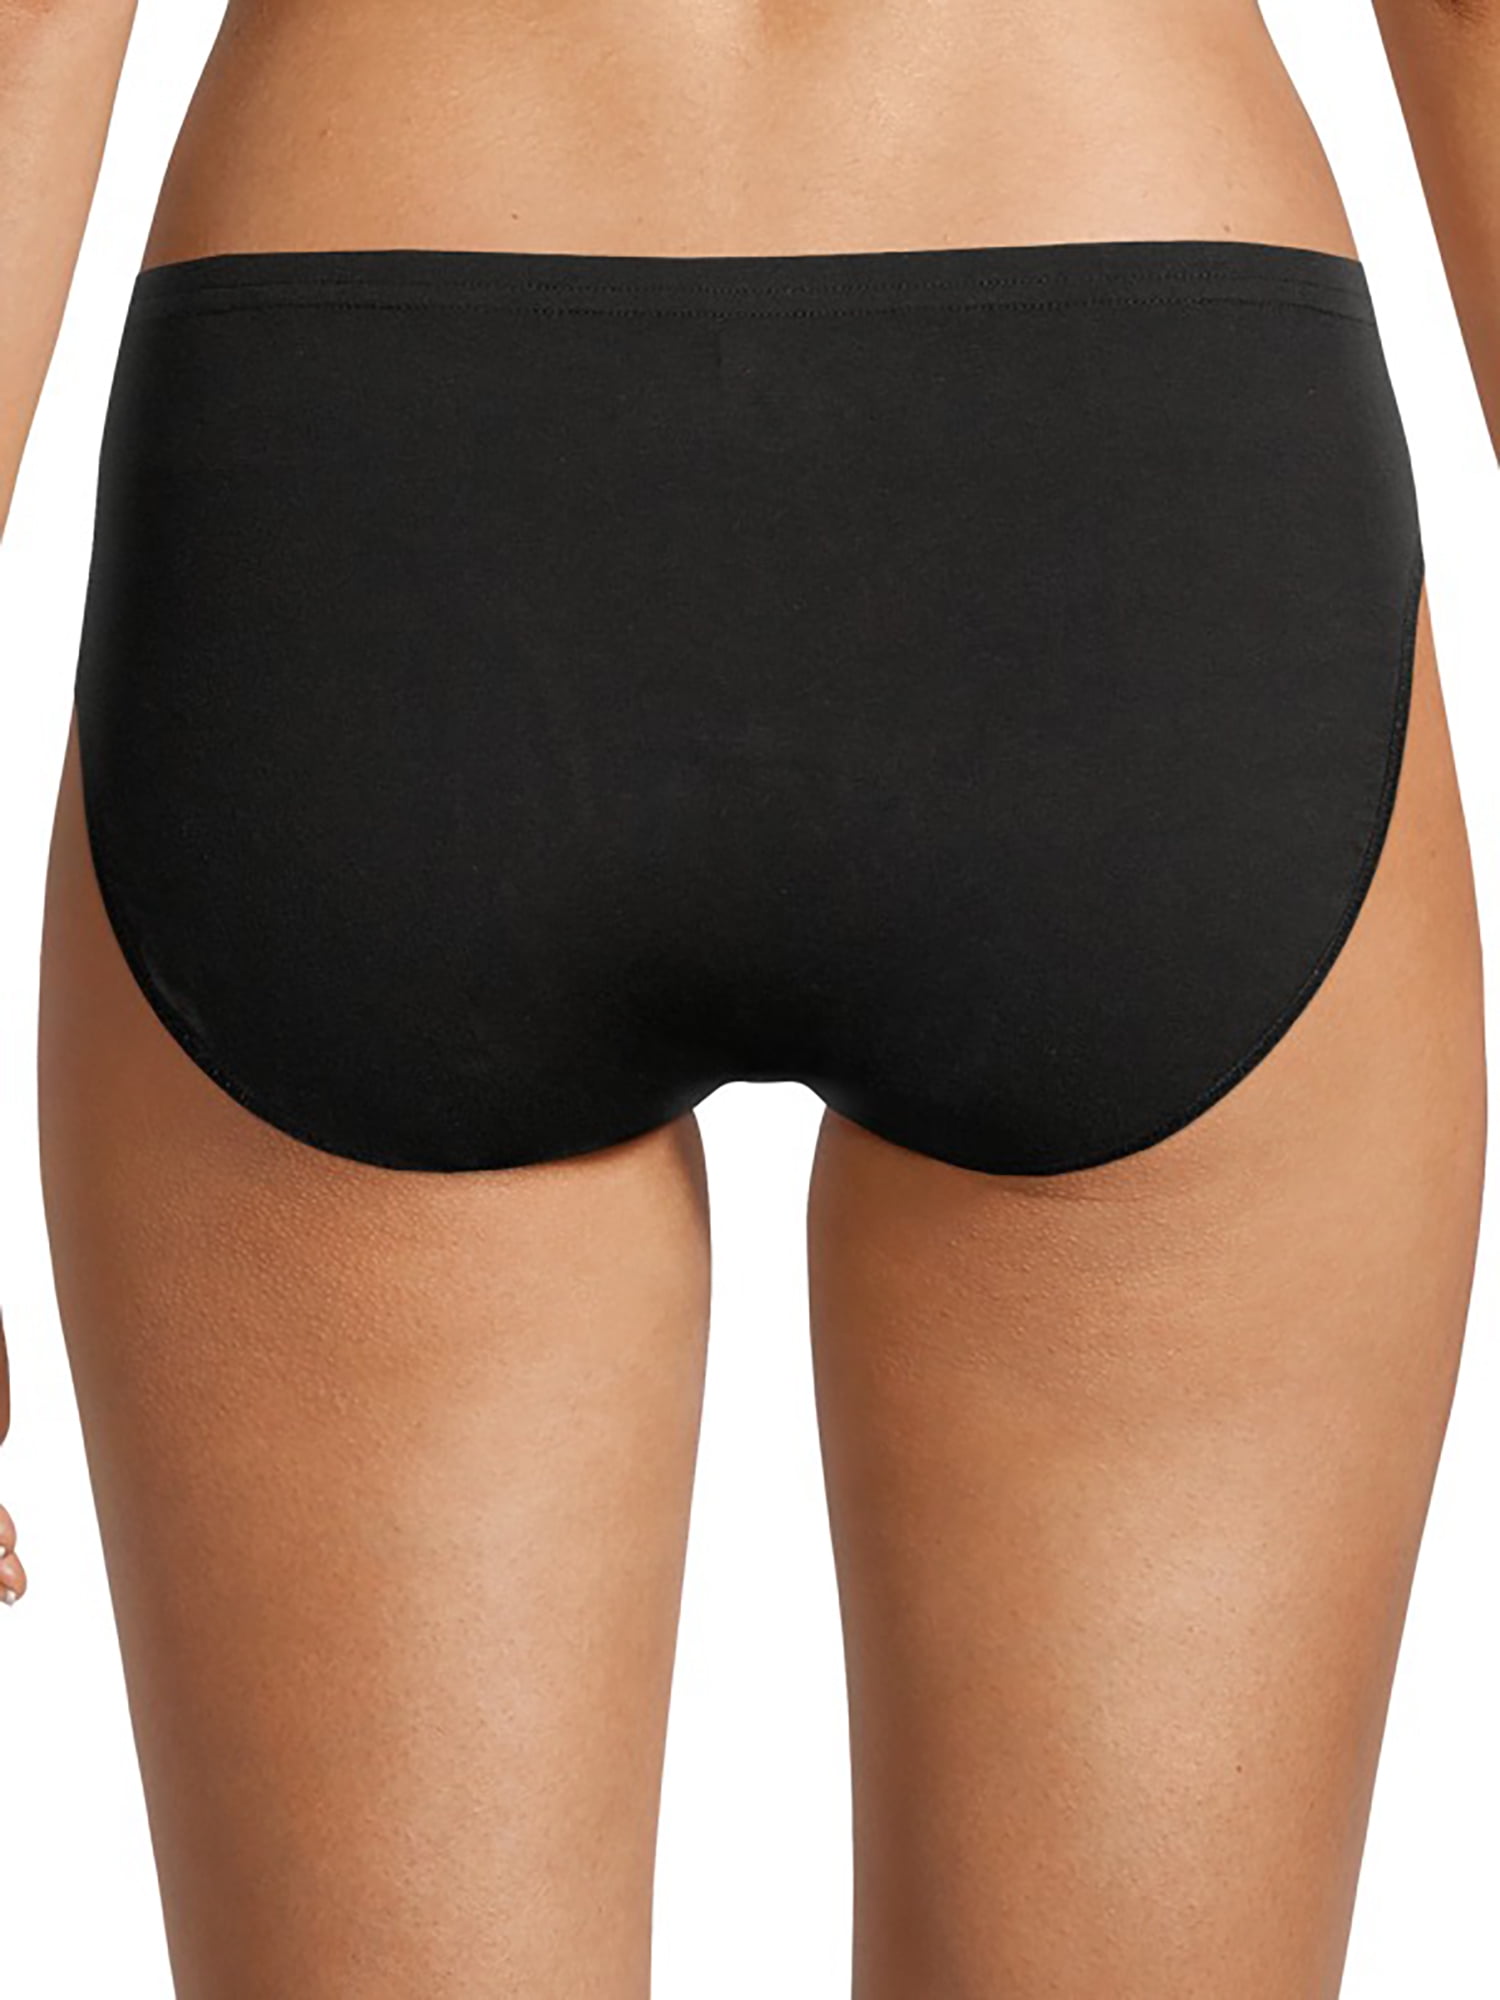 Sympton beloning dienen Best Fitting Panty Women's Cotton Stretch Bikini, 6 Pack - Walmart.com